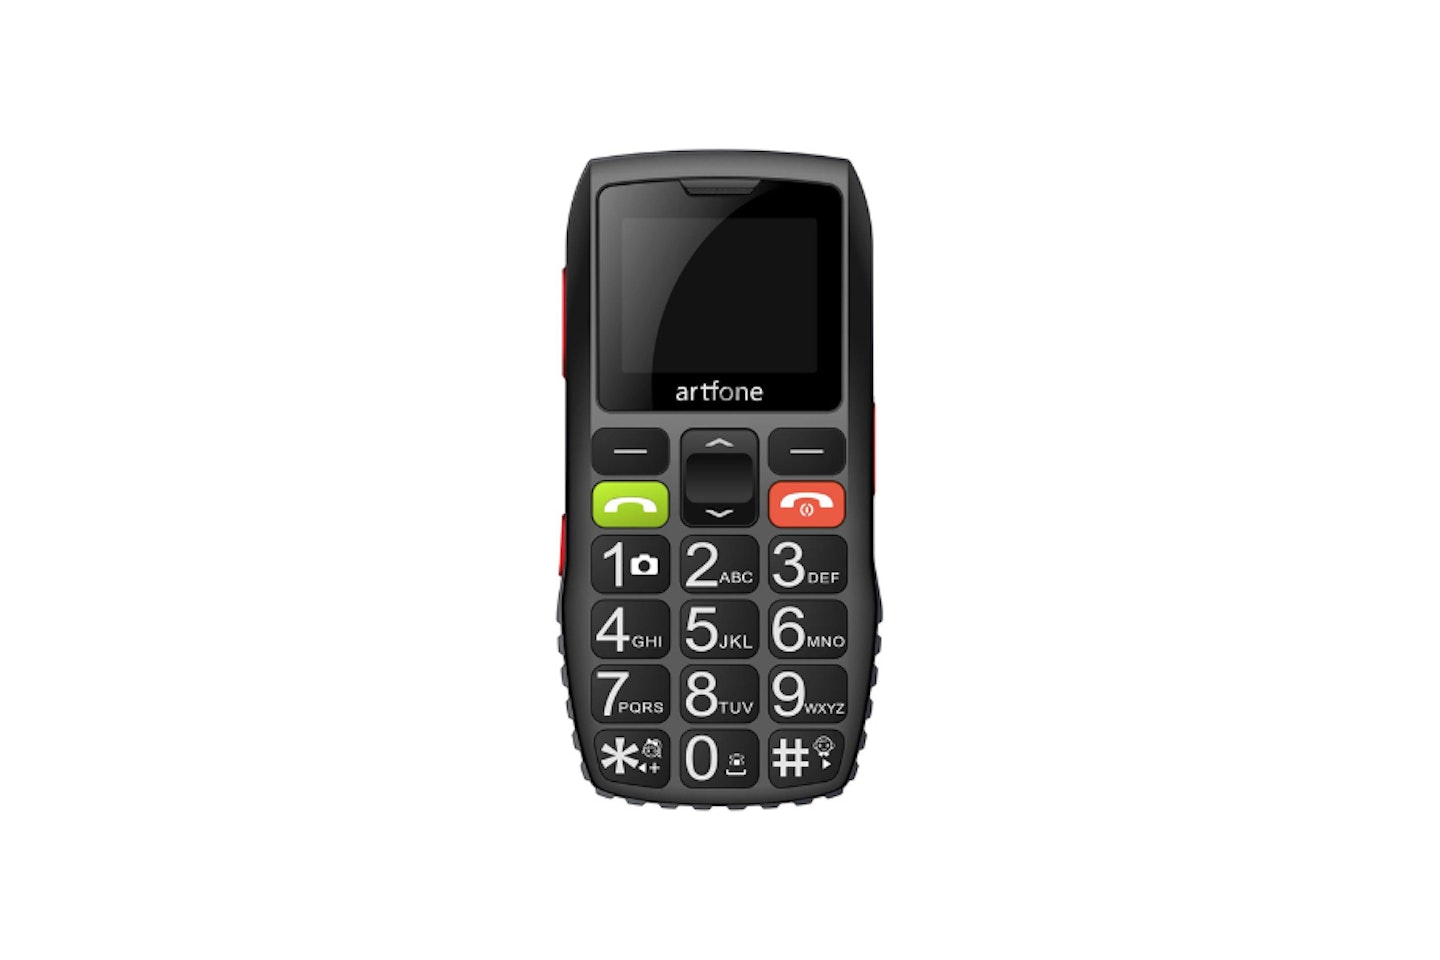 Artfone C1 mobile phone